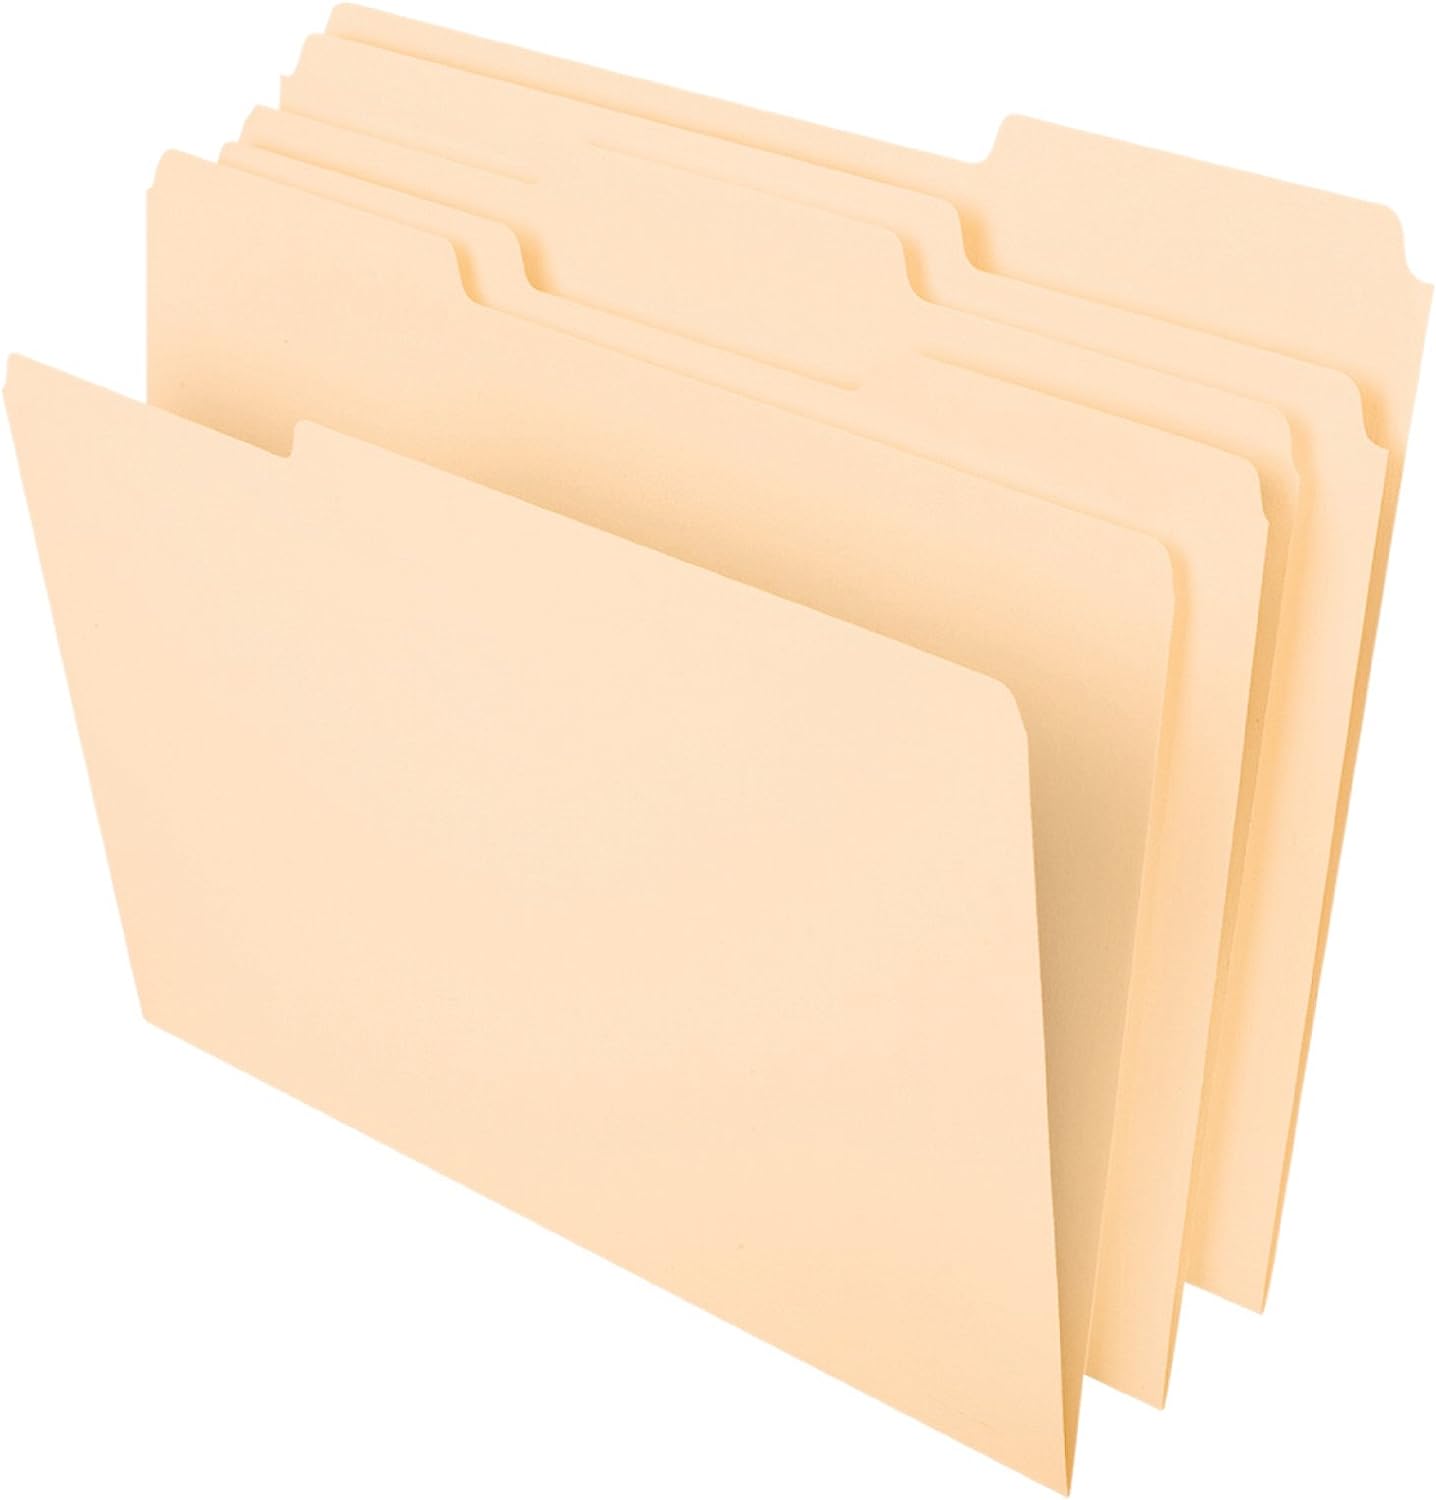 Folder Manilla Lletter size  1/3 C 100 per box